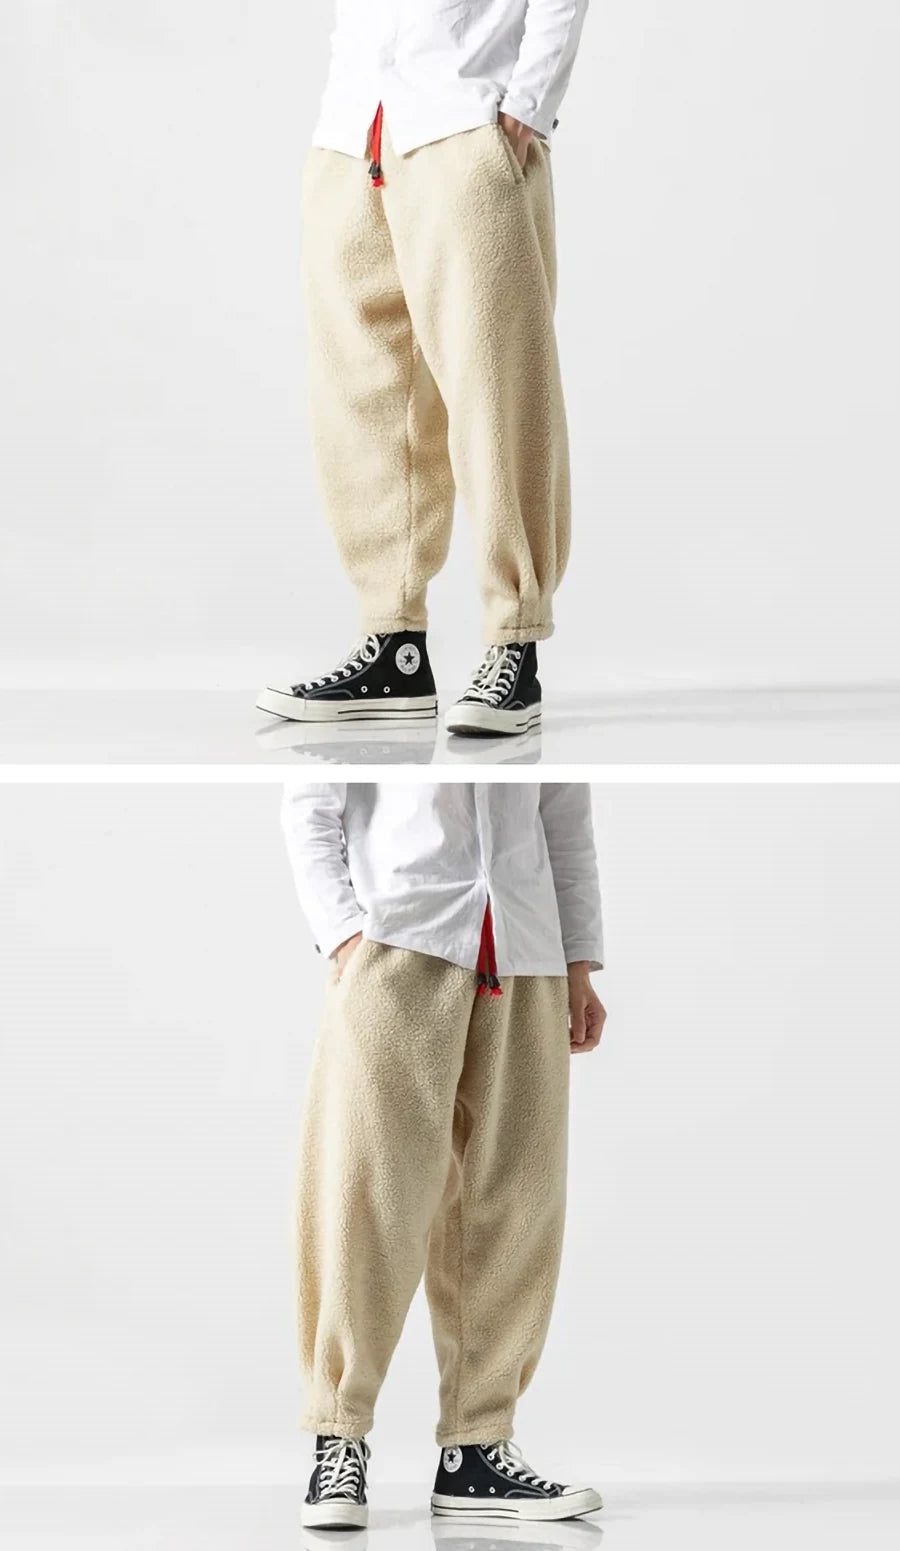 Men's fleece jogger pants "Tsugawa" in 2 angles